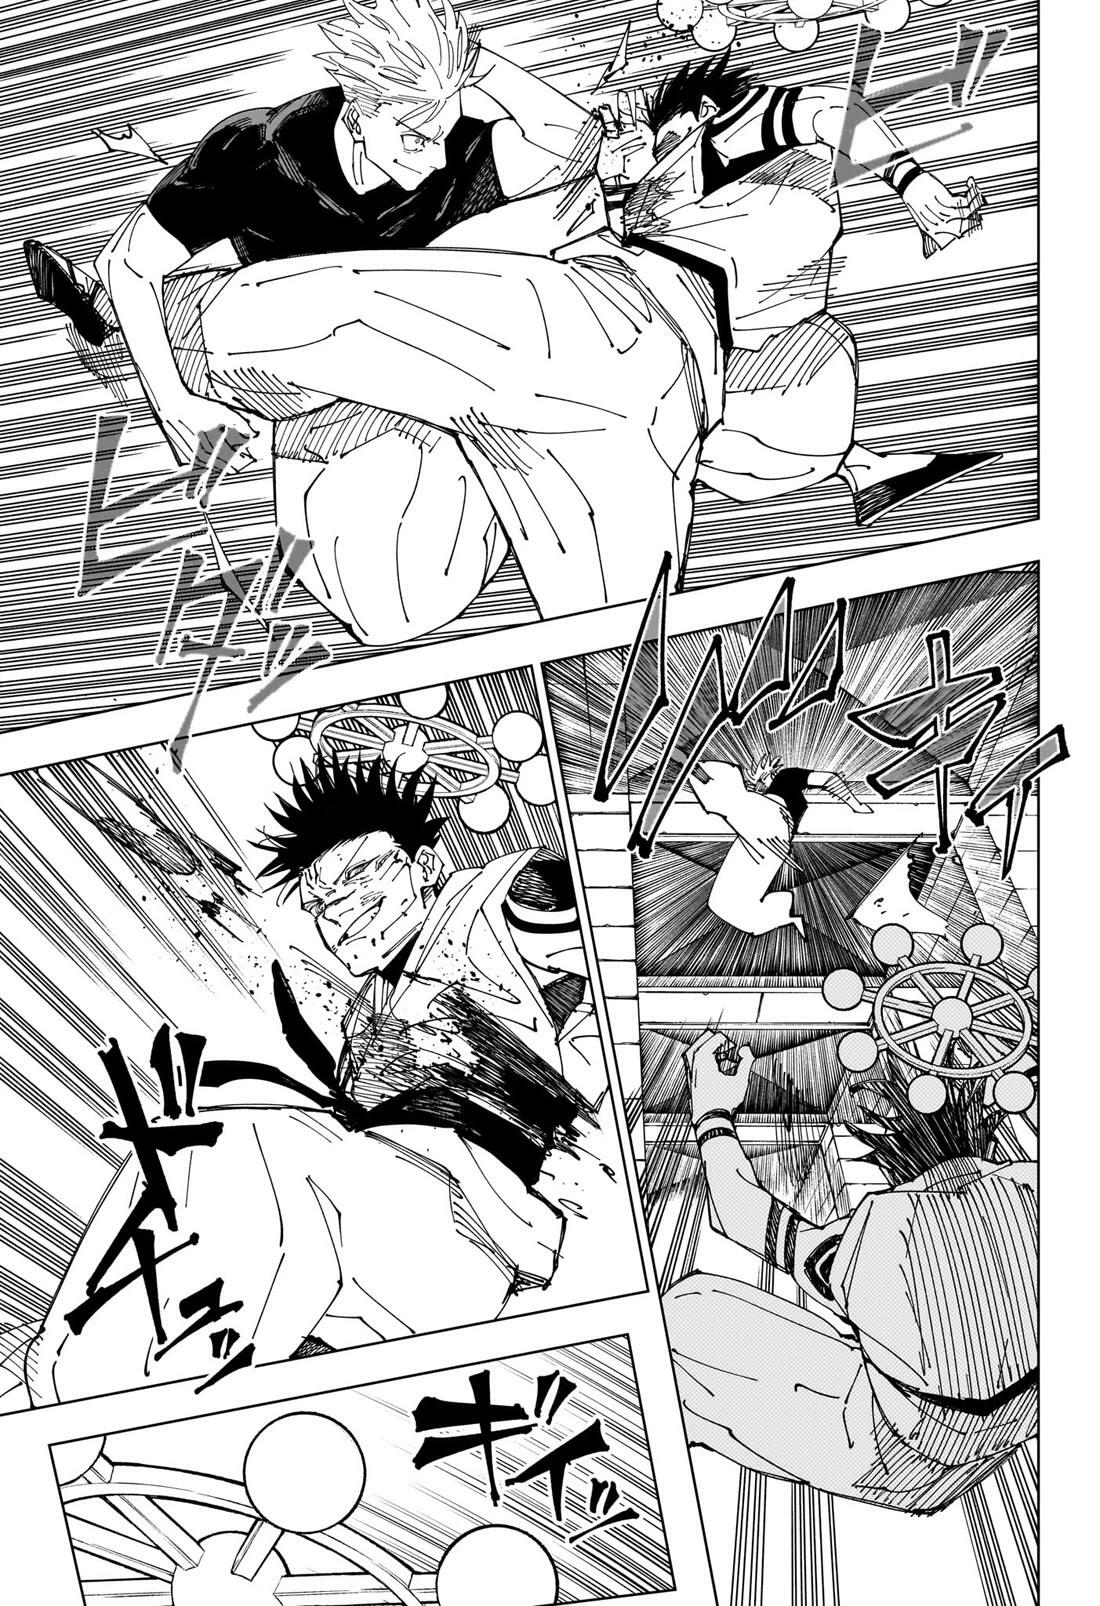 Jujutsu Kaisen Chapter 232: The Decisive Battle In The Uninhabited, Demon-Infested Shinjuku ⑩ page 6 - Mangakakalot